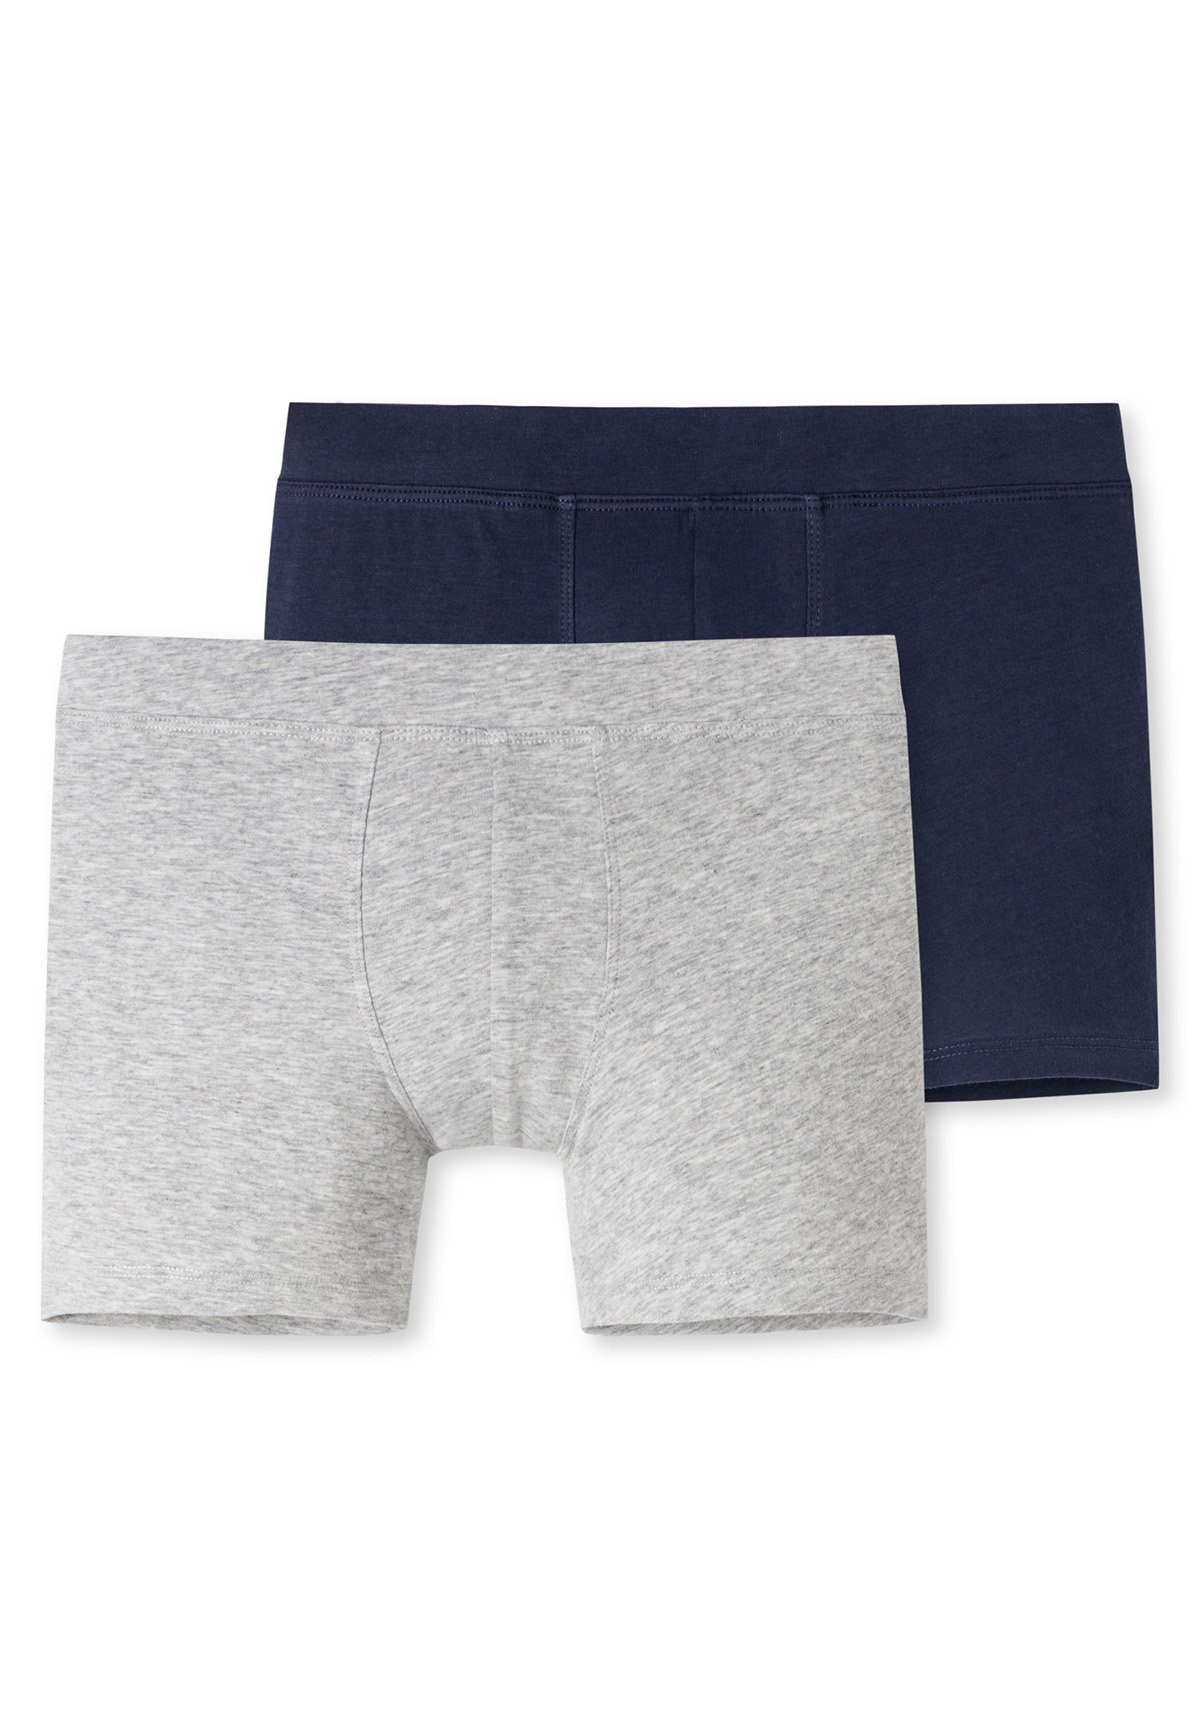 Schiesser Boxer Jungen Boxershorts, Pants - Pack Blau/Grau 2er Unterhose